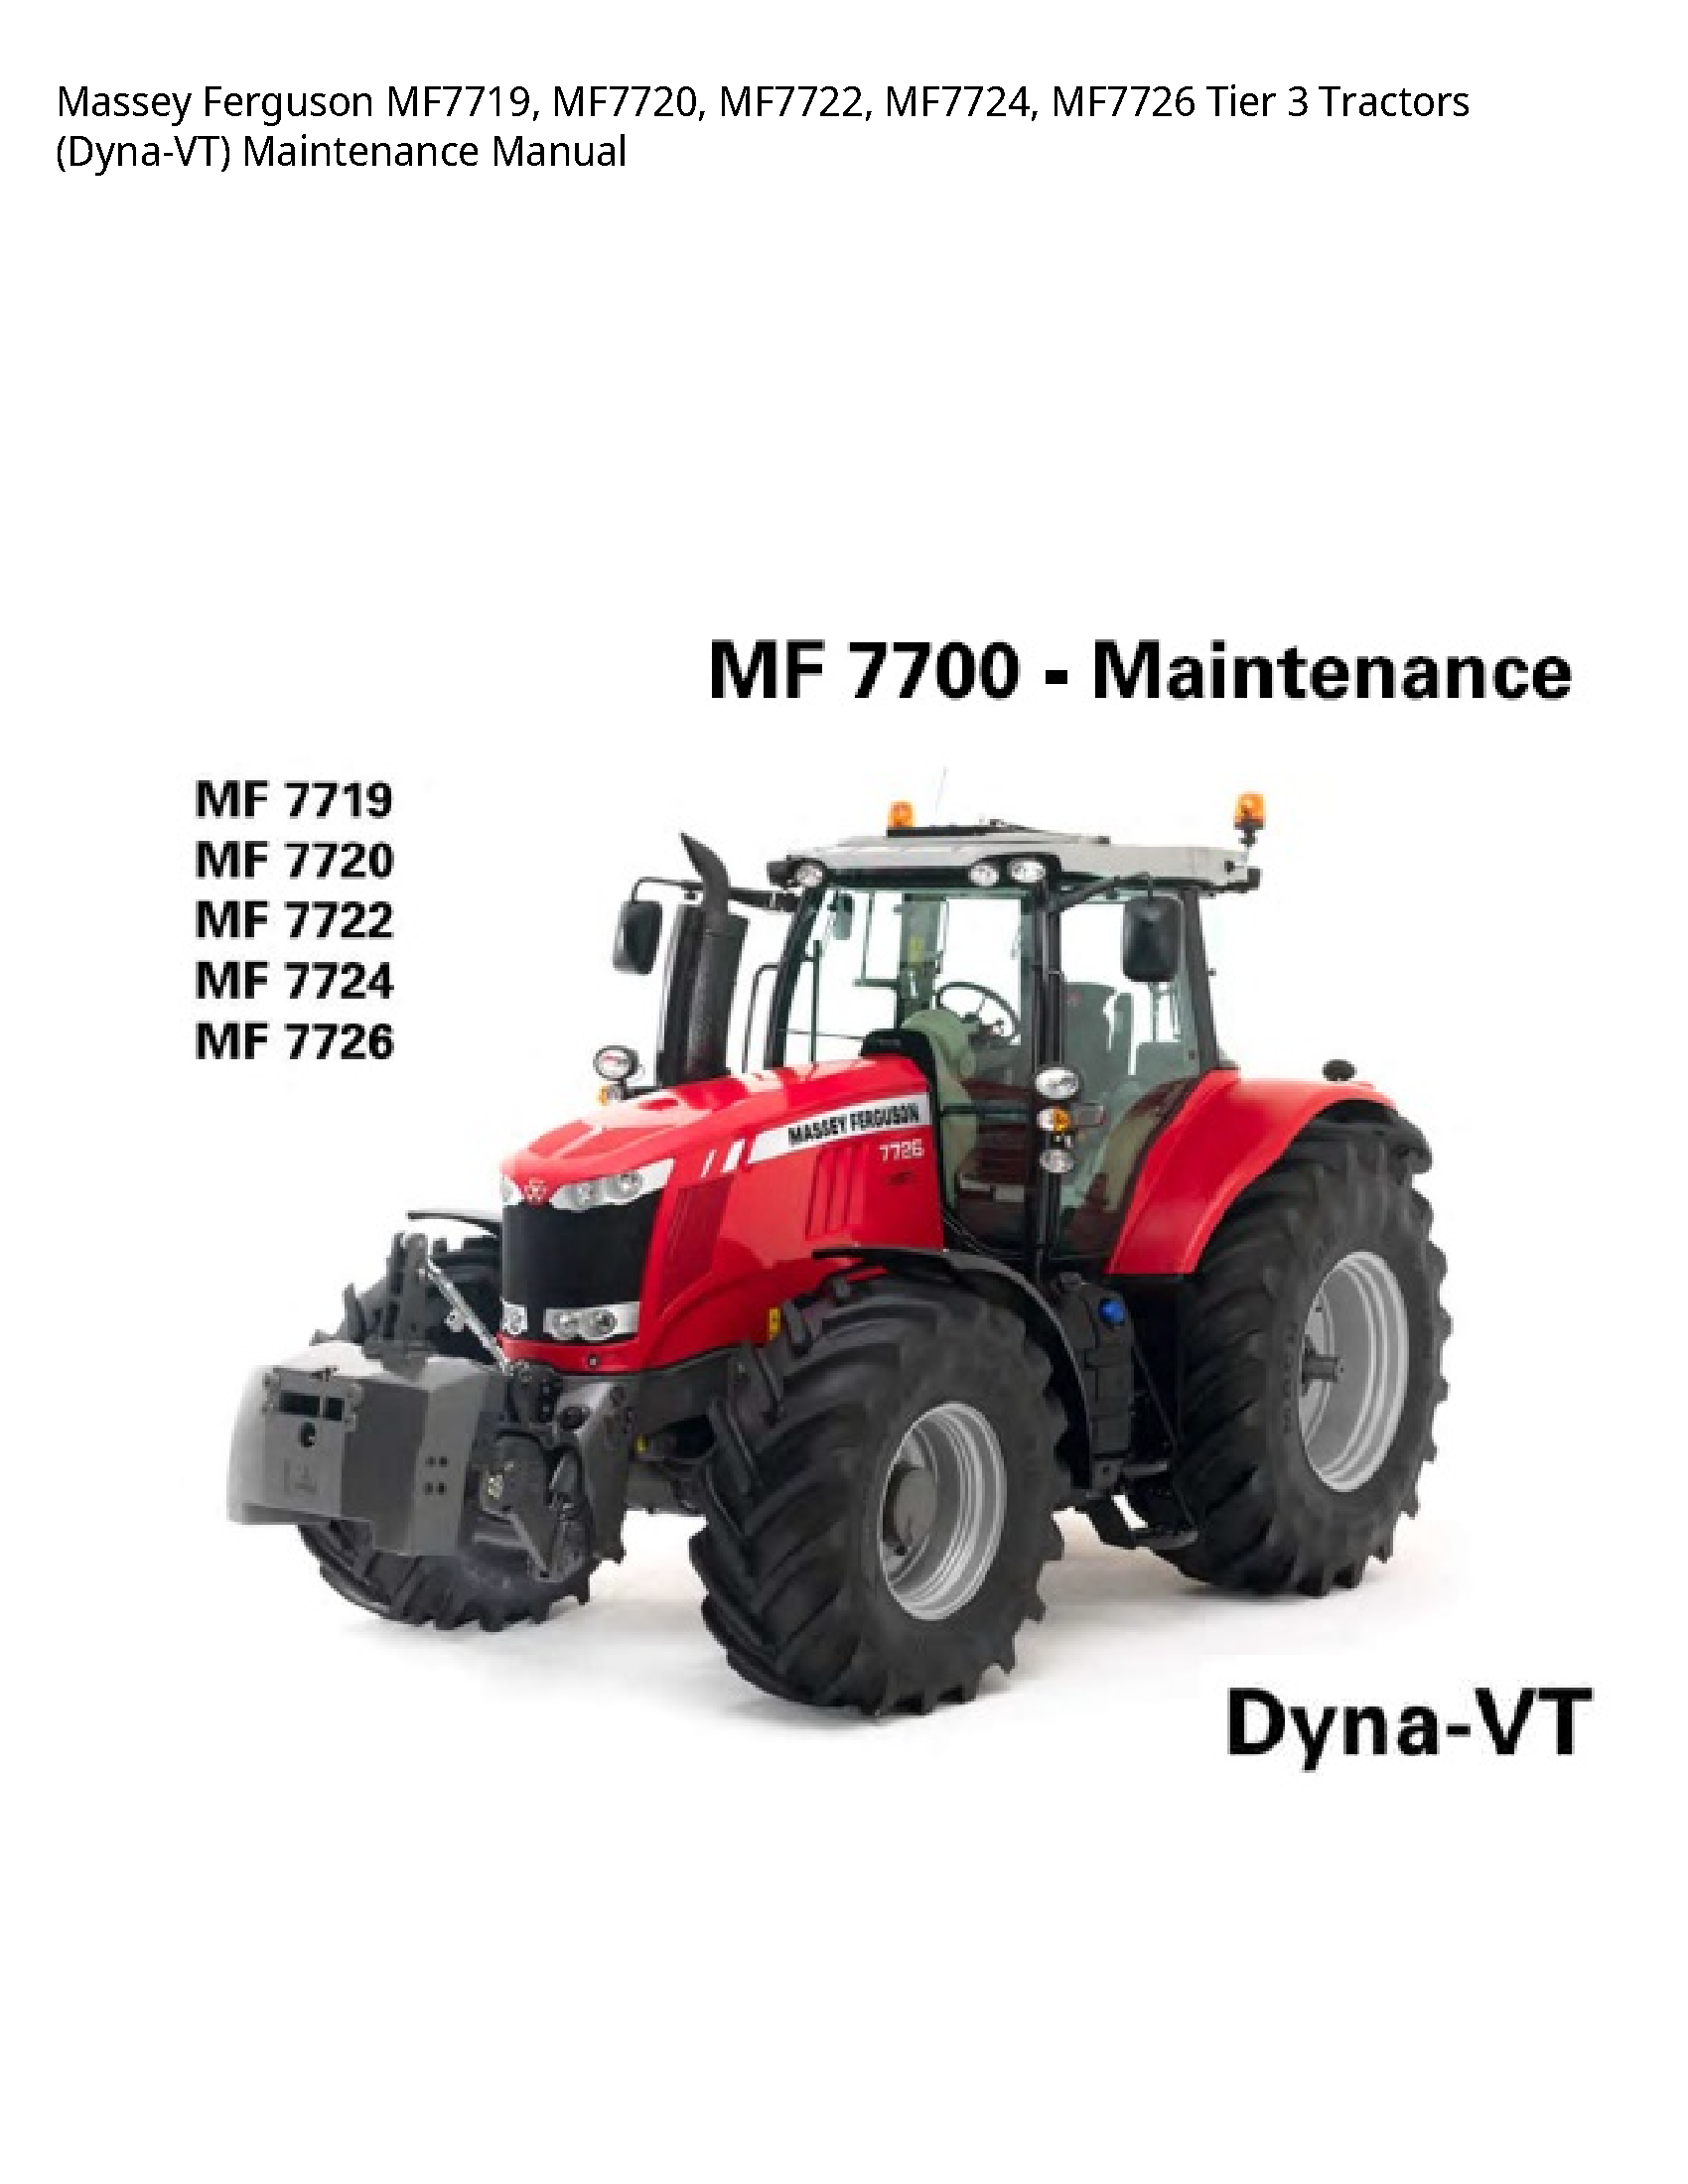 Massey Ferguson MF7719 Tier Tractors (Dyna-VT) Maintenance manual